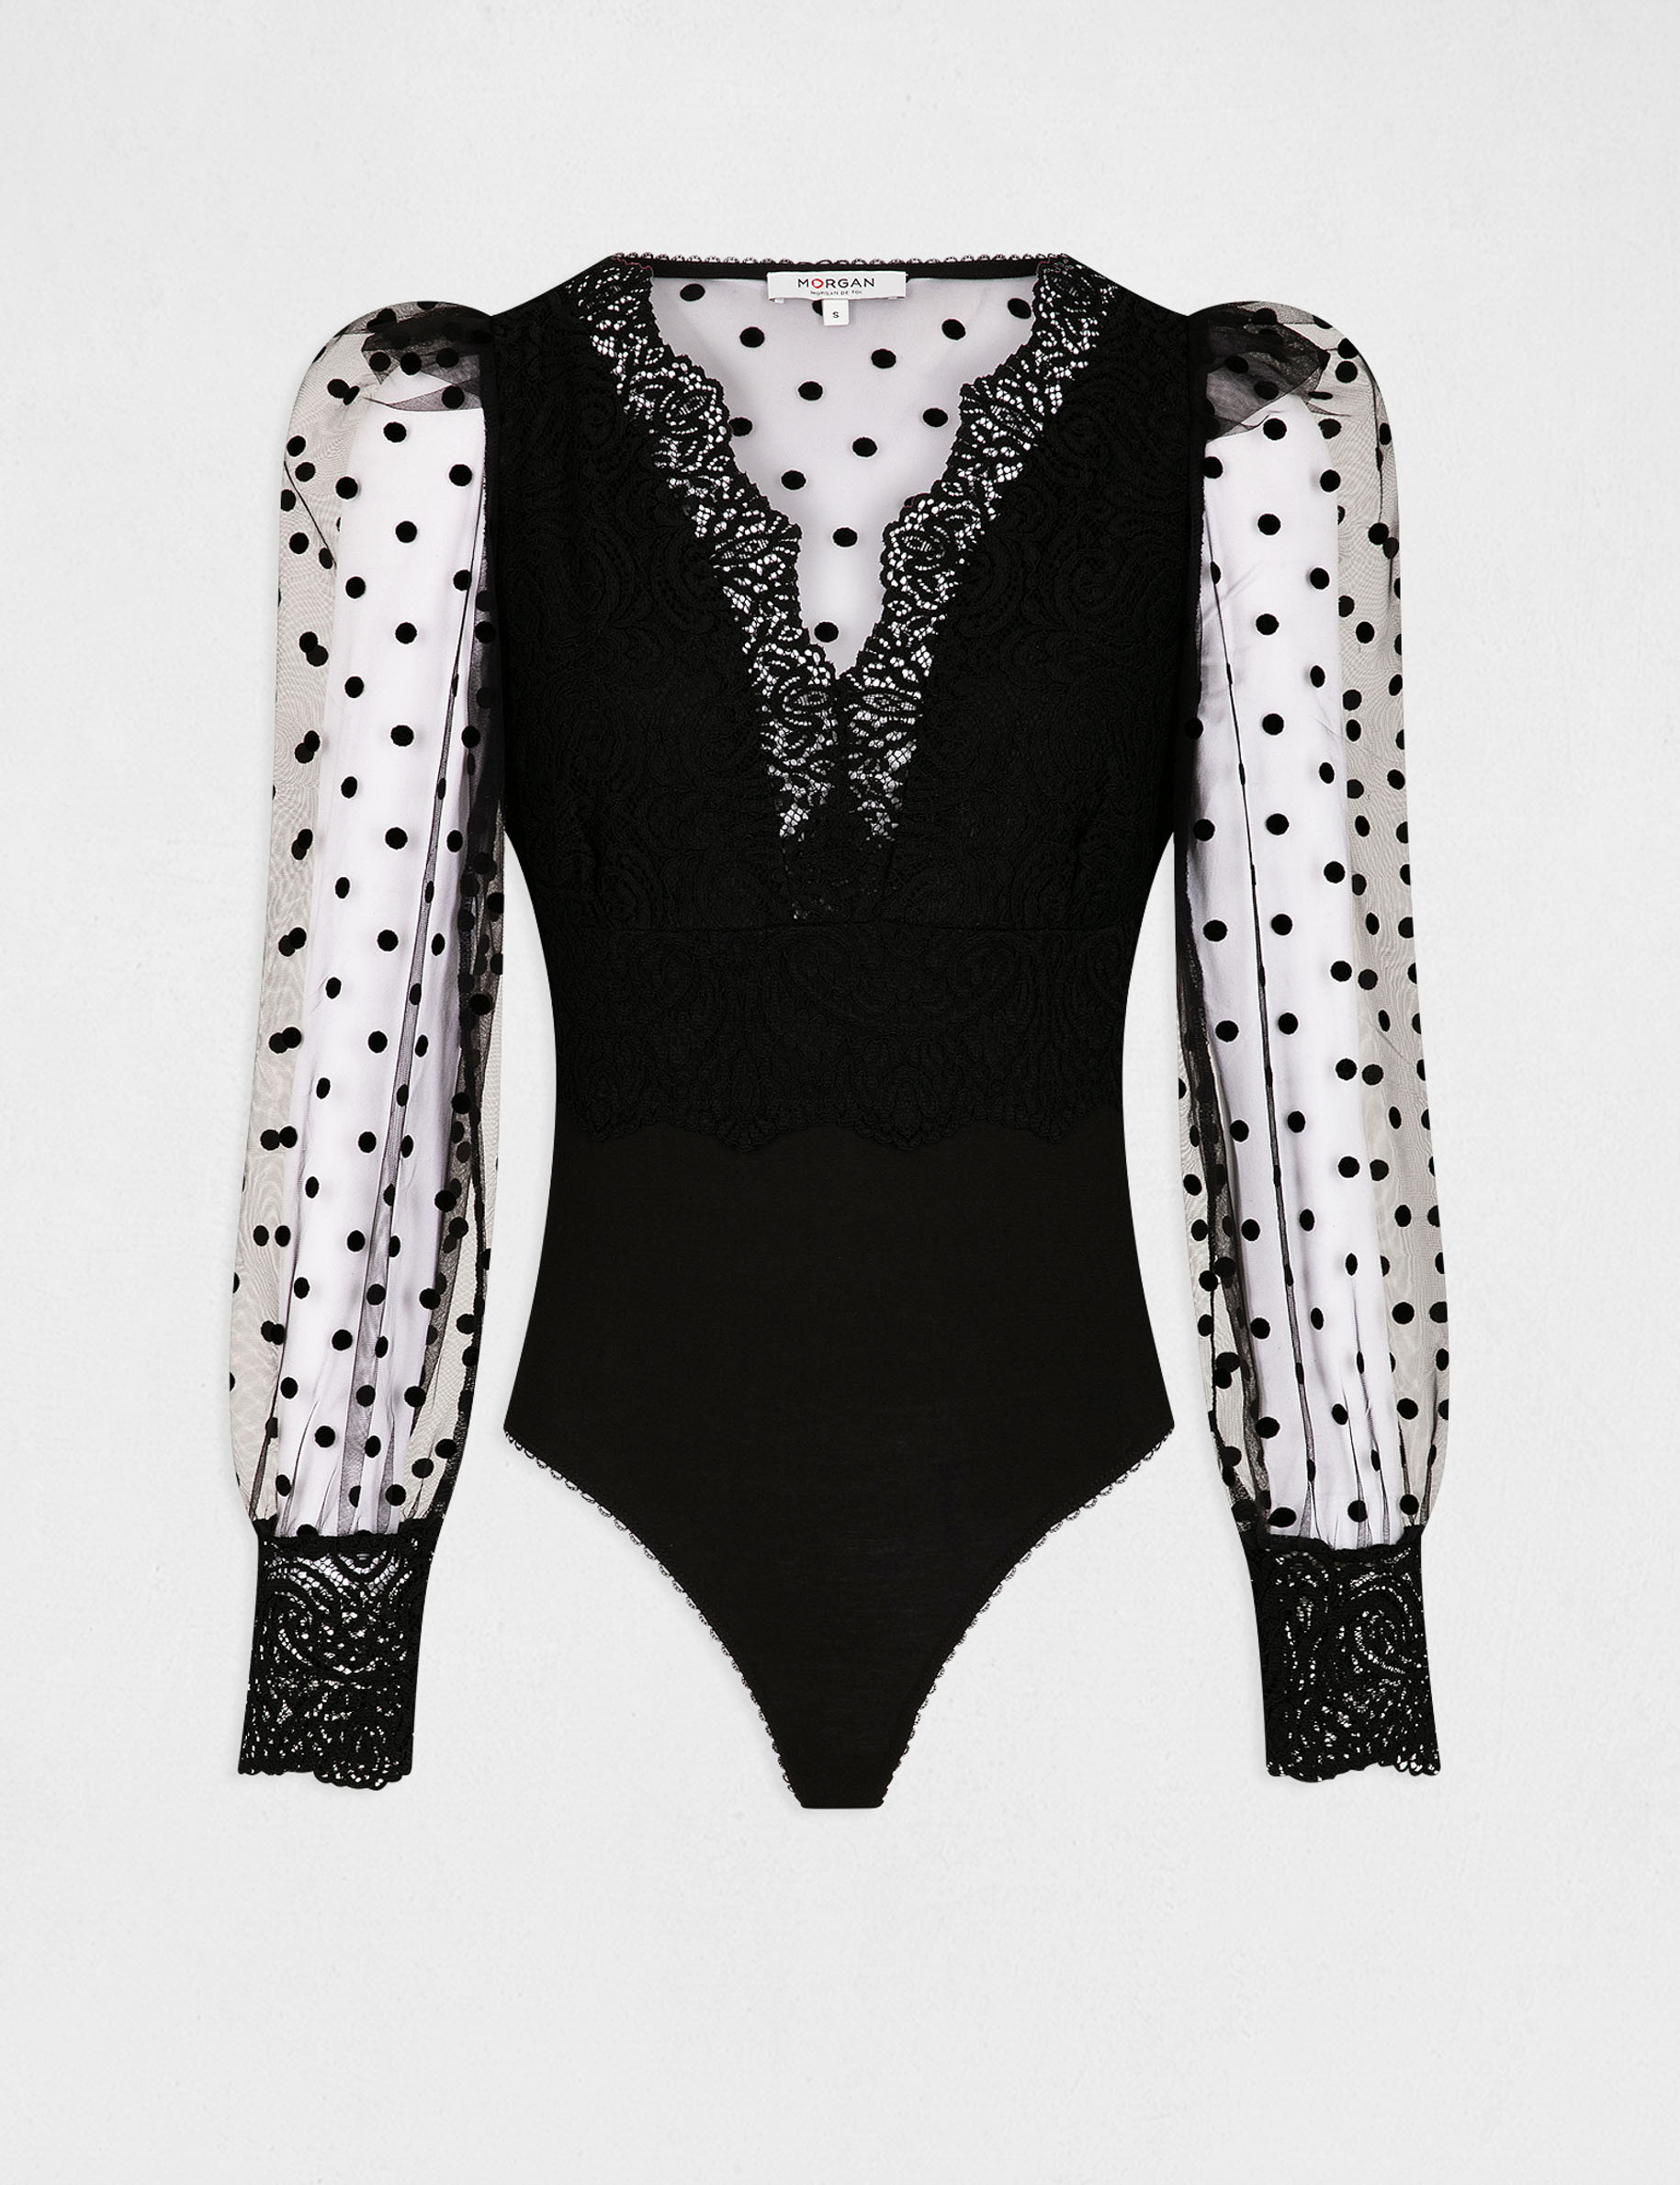 ASOS Morgan Linear Lace Underwire Bodysuit in Black